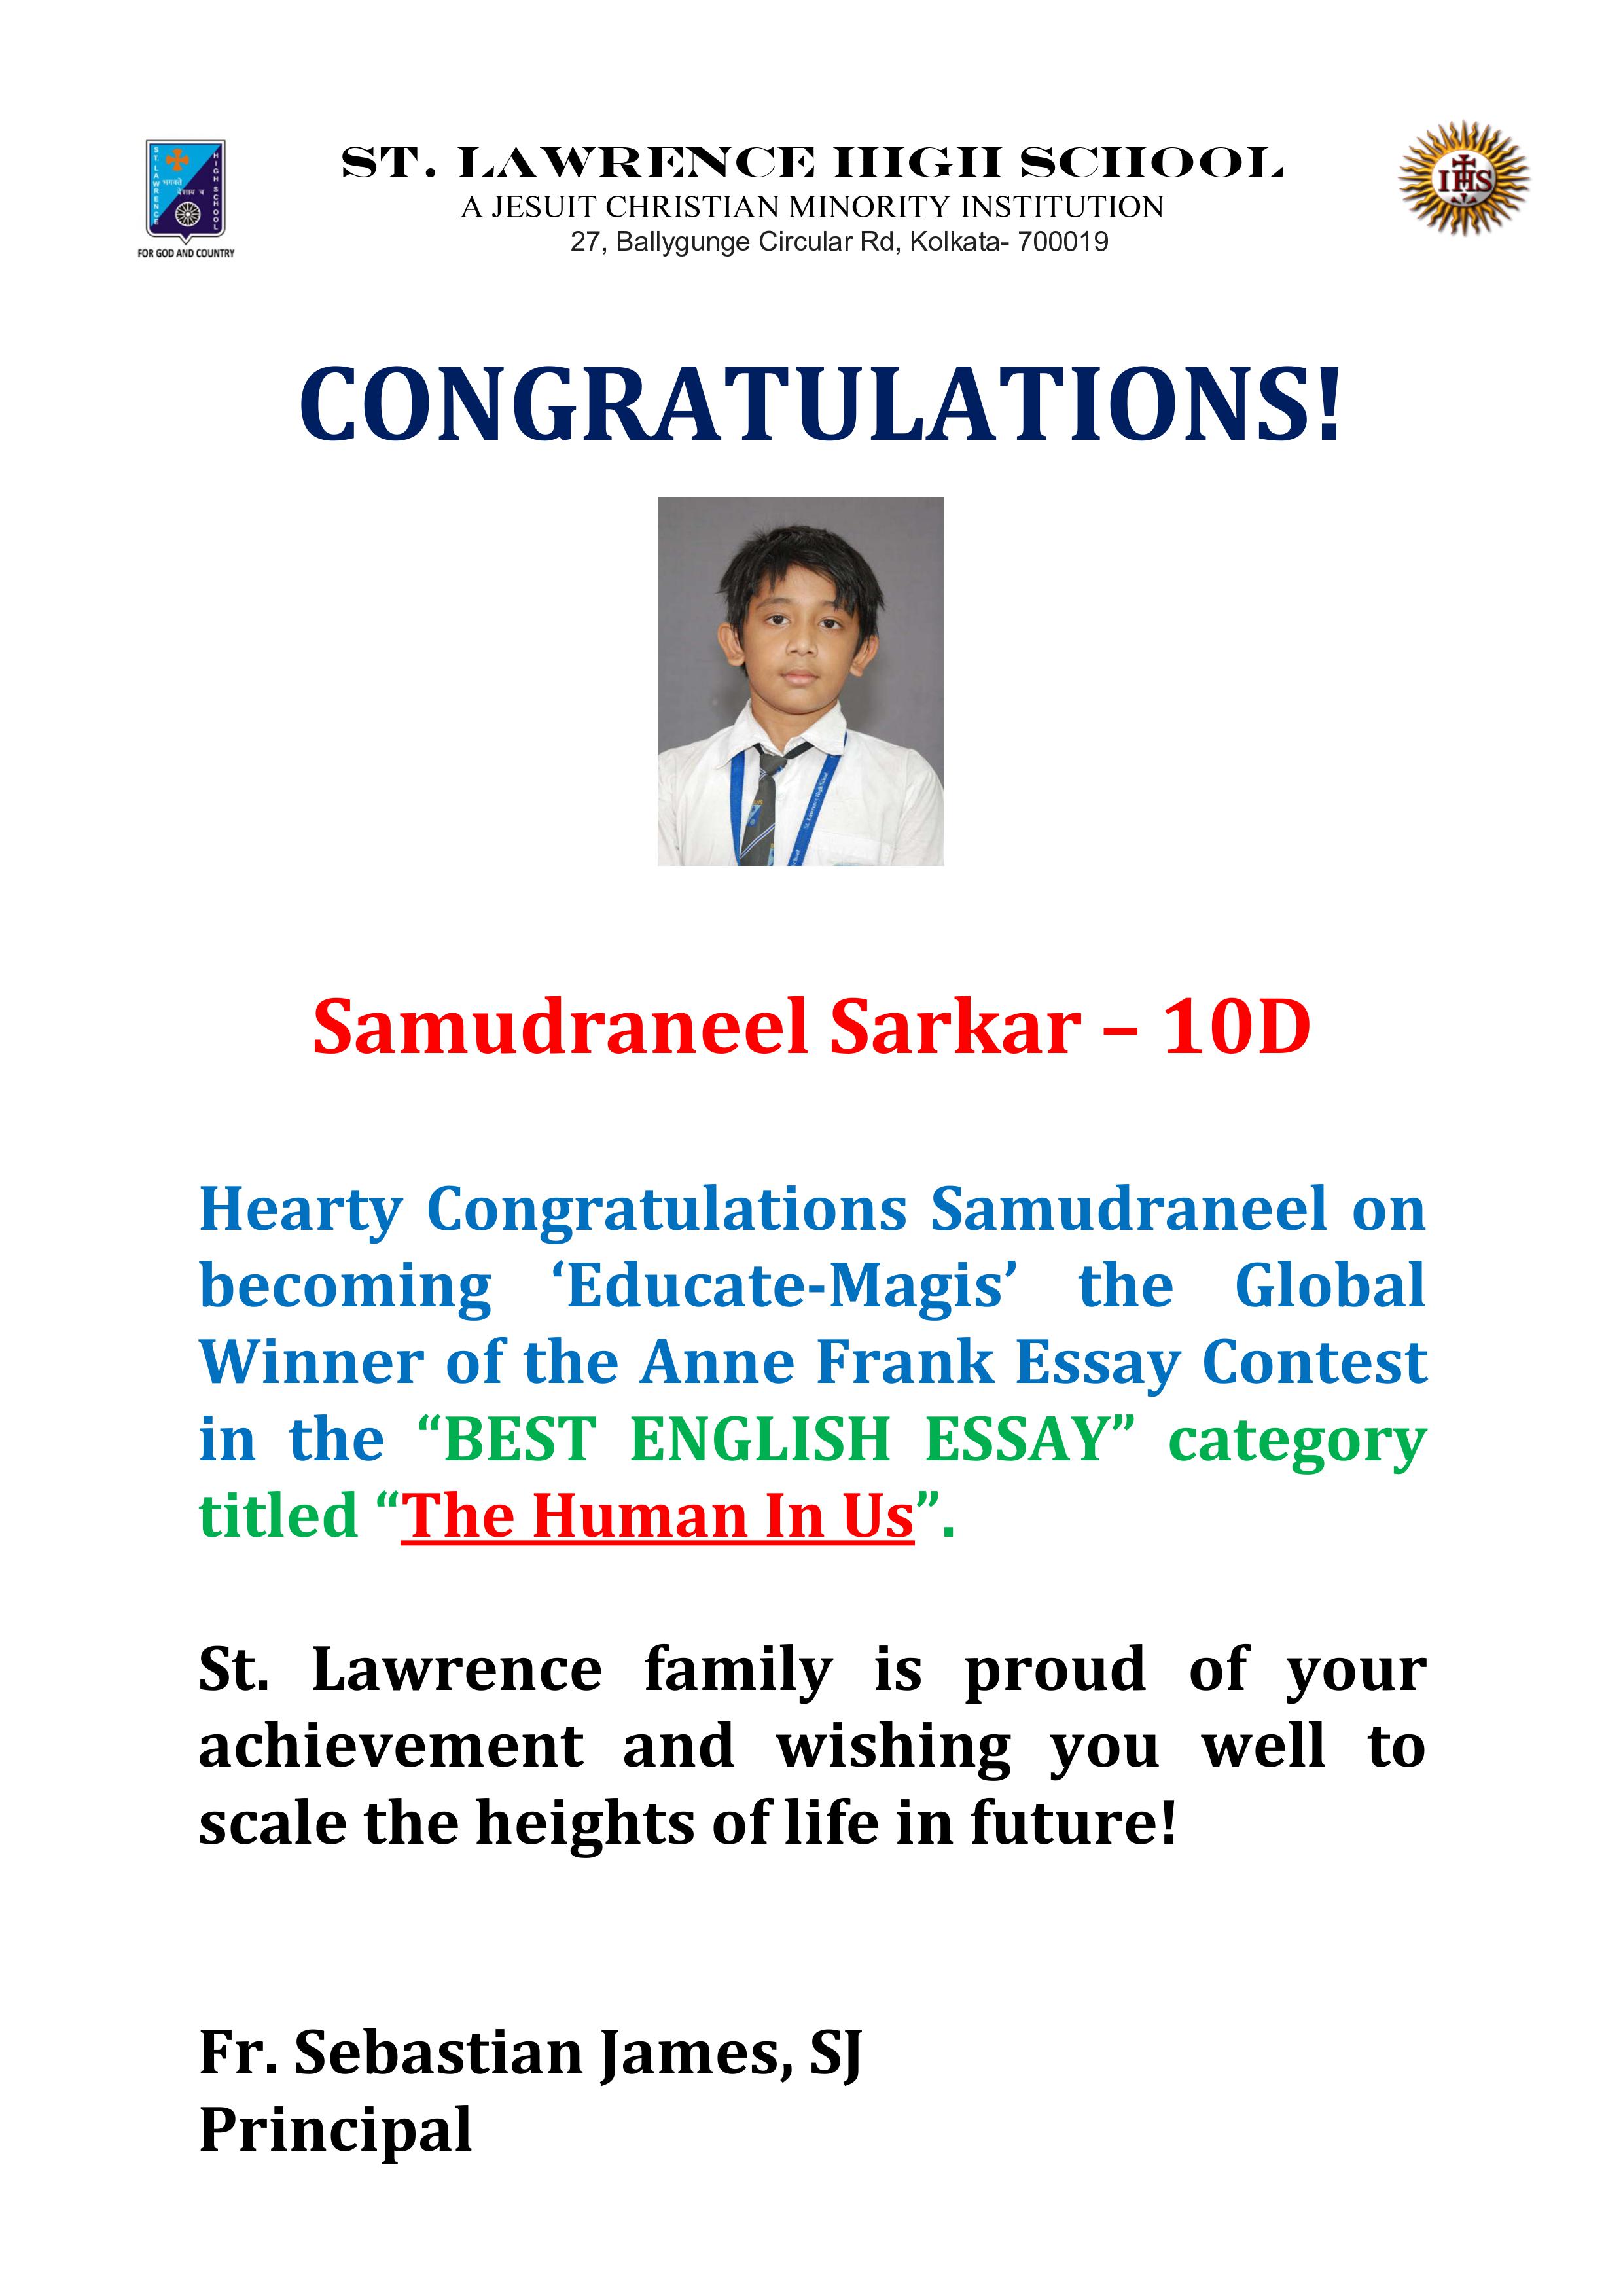 Samudraneel Sarkar – 10D - Winner of the Anne Frank Essay Contest in the “BEST ENGLISH ESSAY”